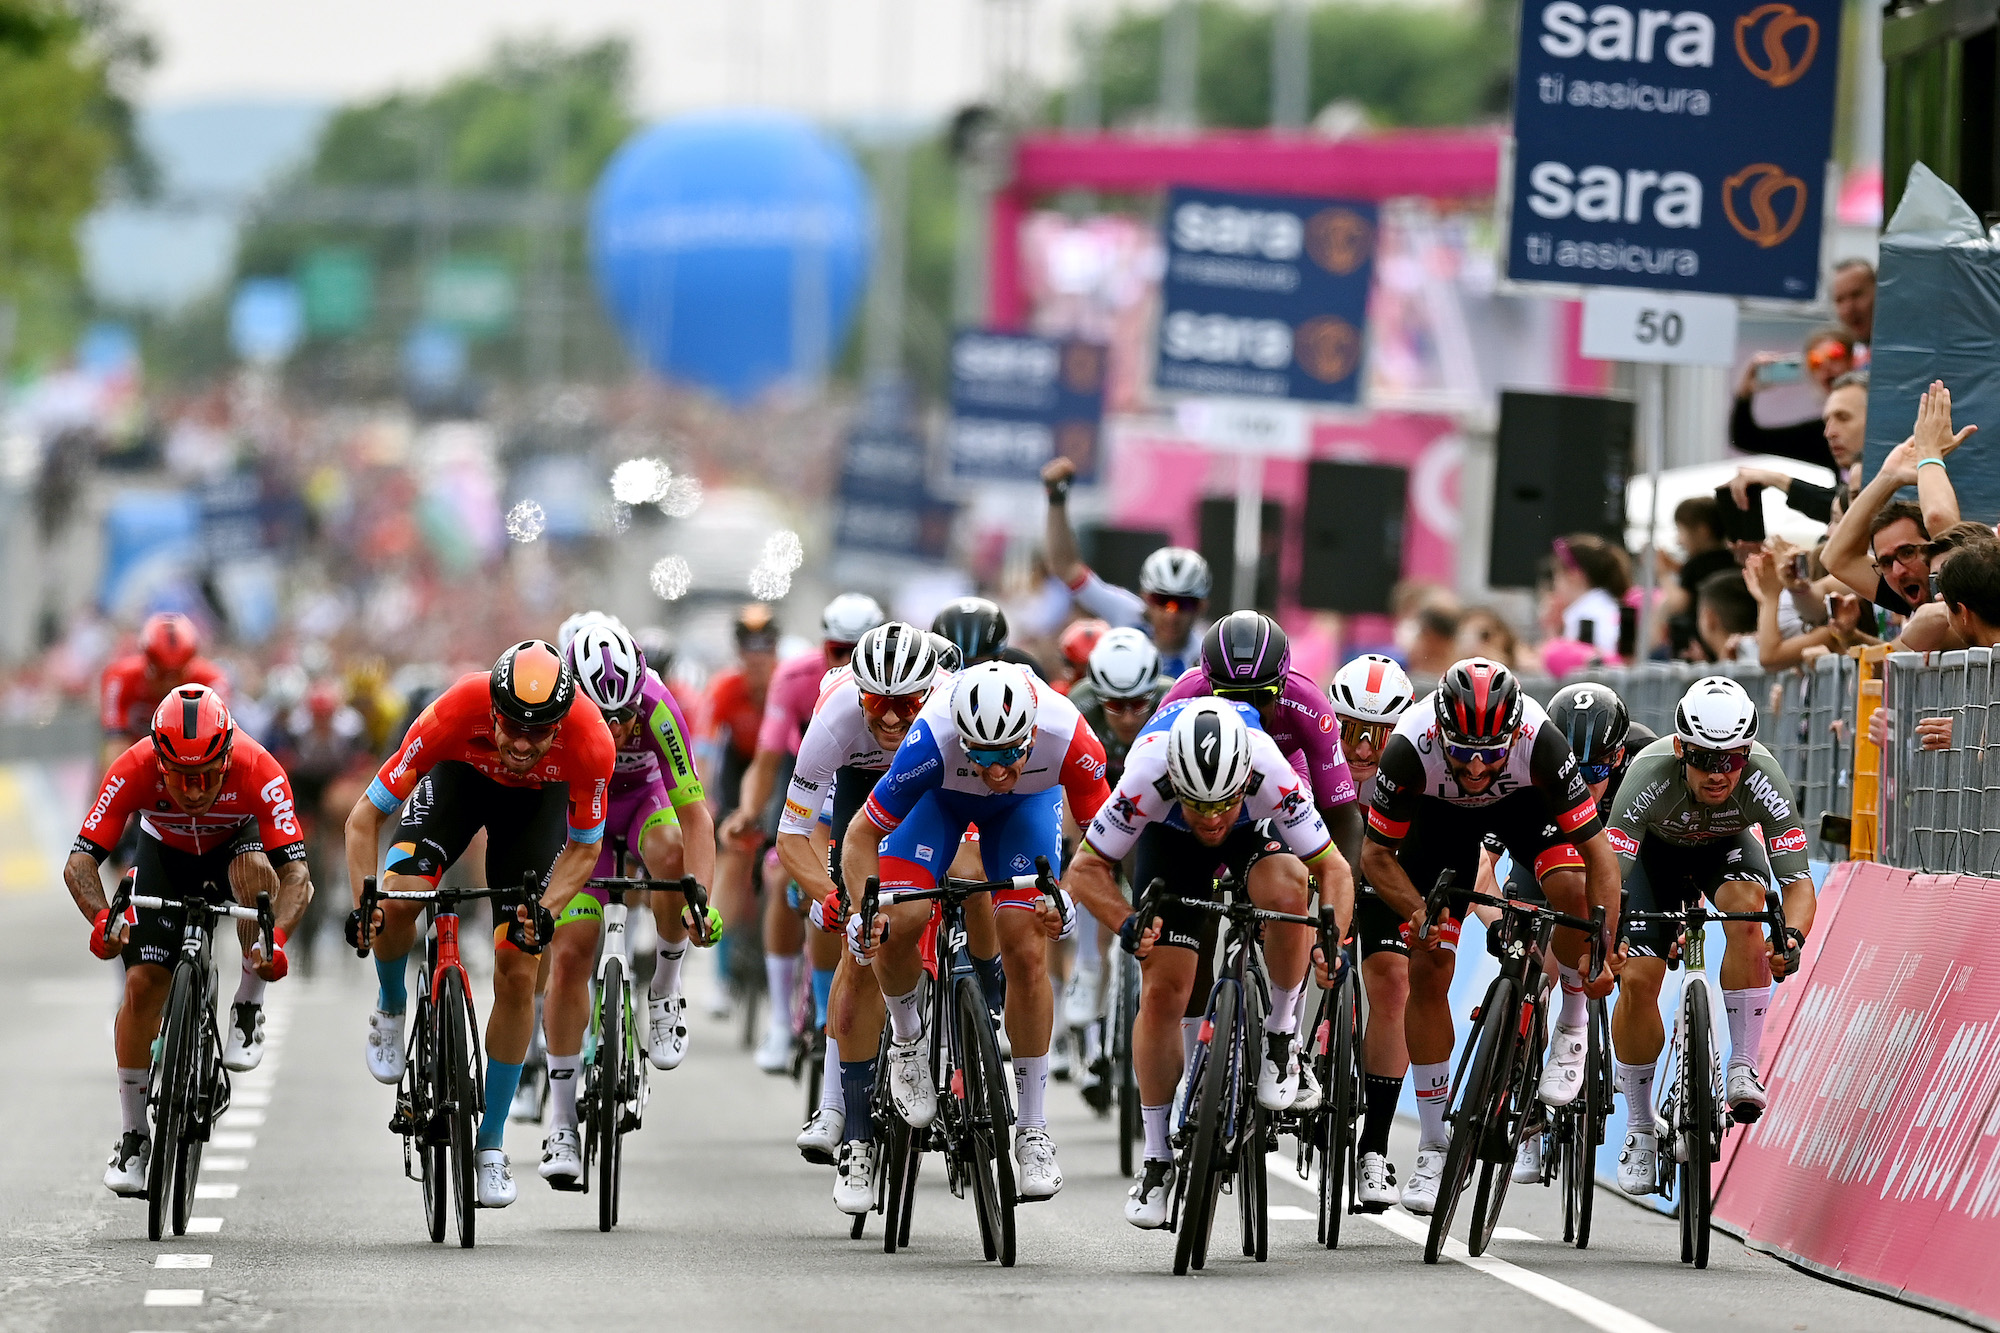 How to watch Giro dItalia 2022 Live stream the Italian Grand Tour Cycling Weekly